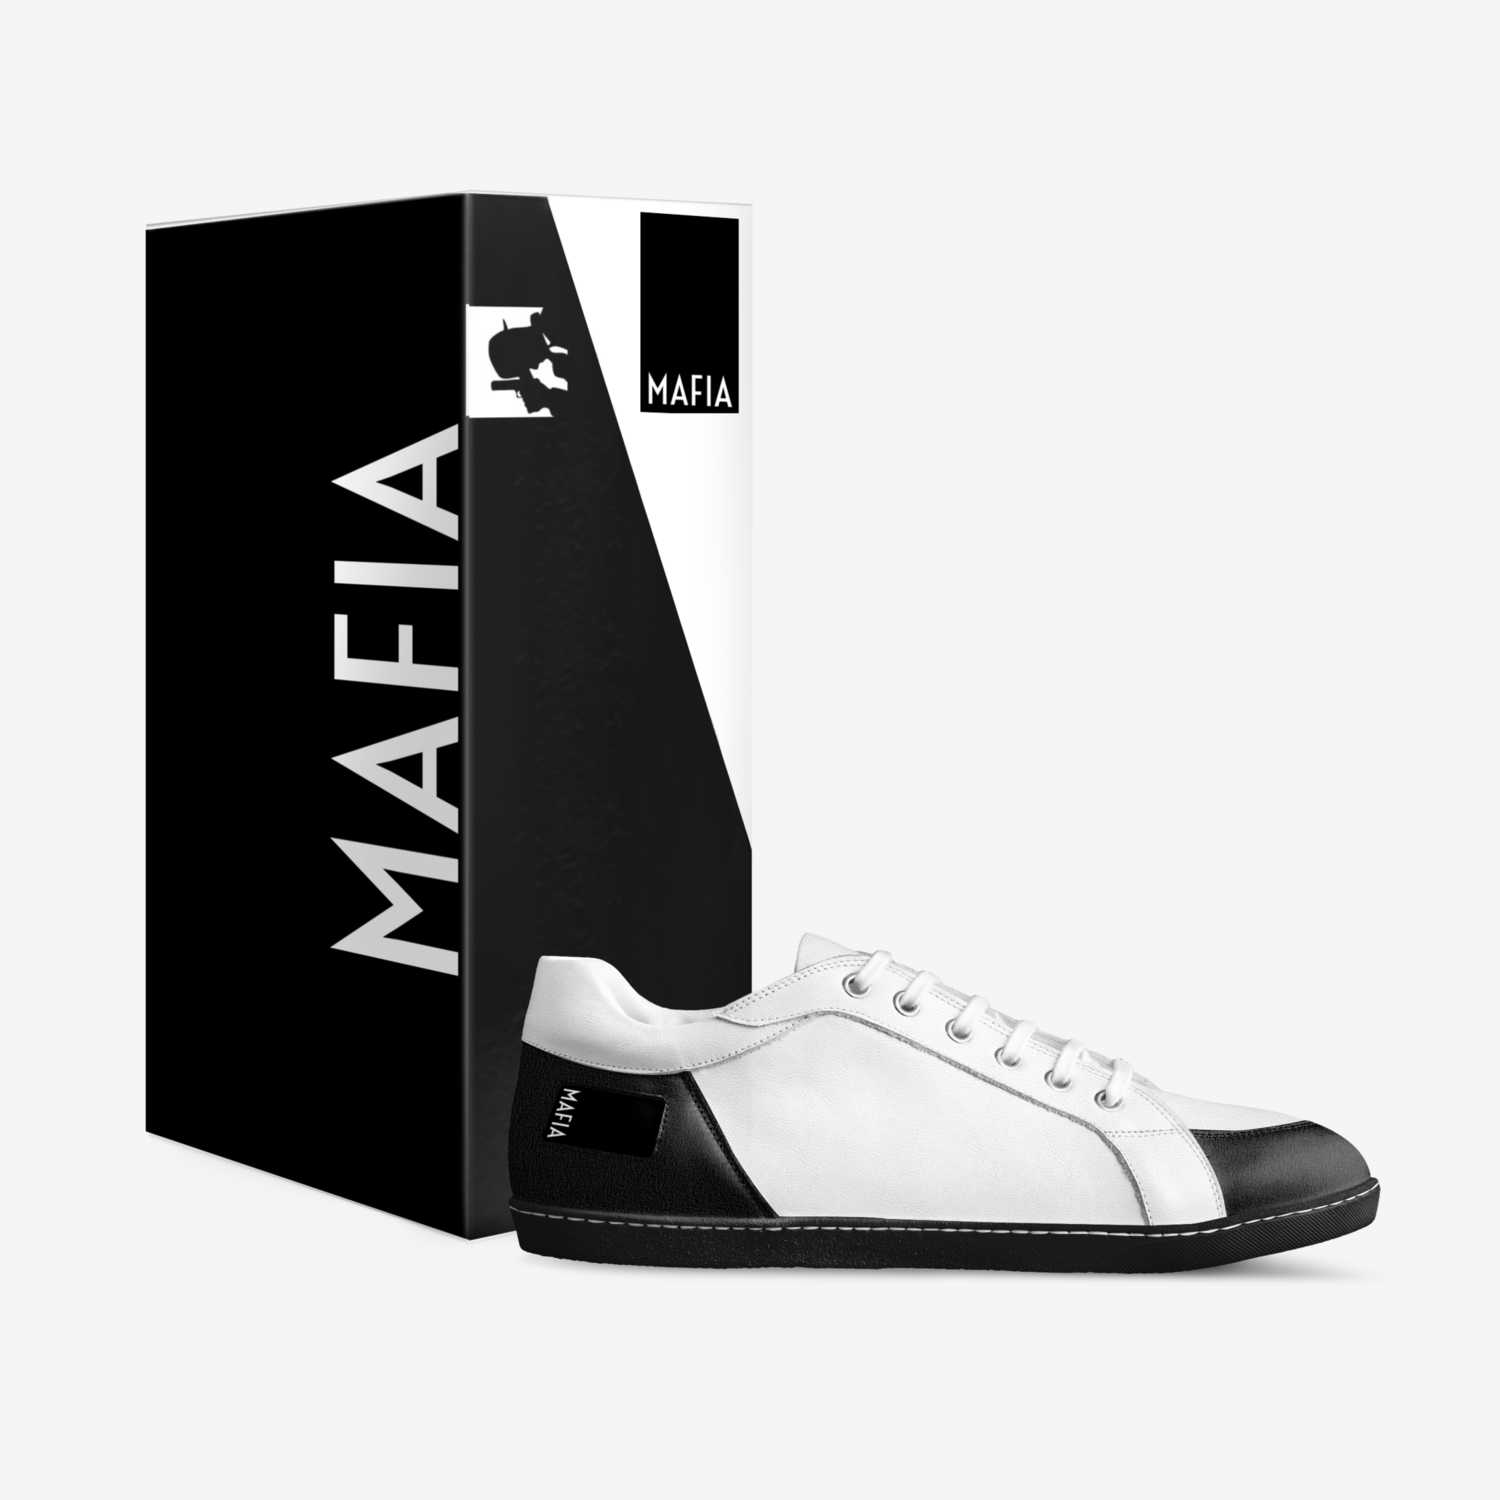 MAFIA custom made in Italy shoes by Fisto Satianto | Box view